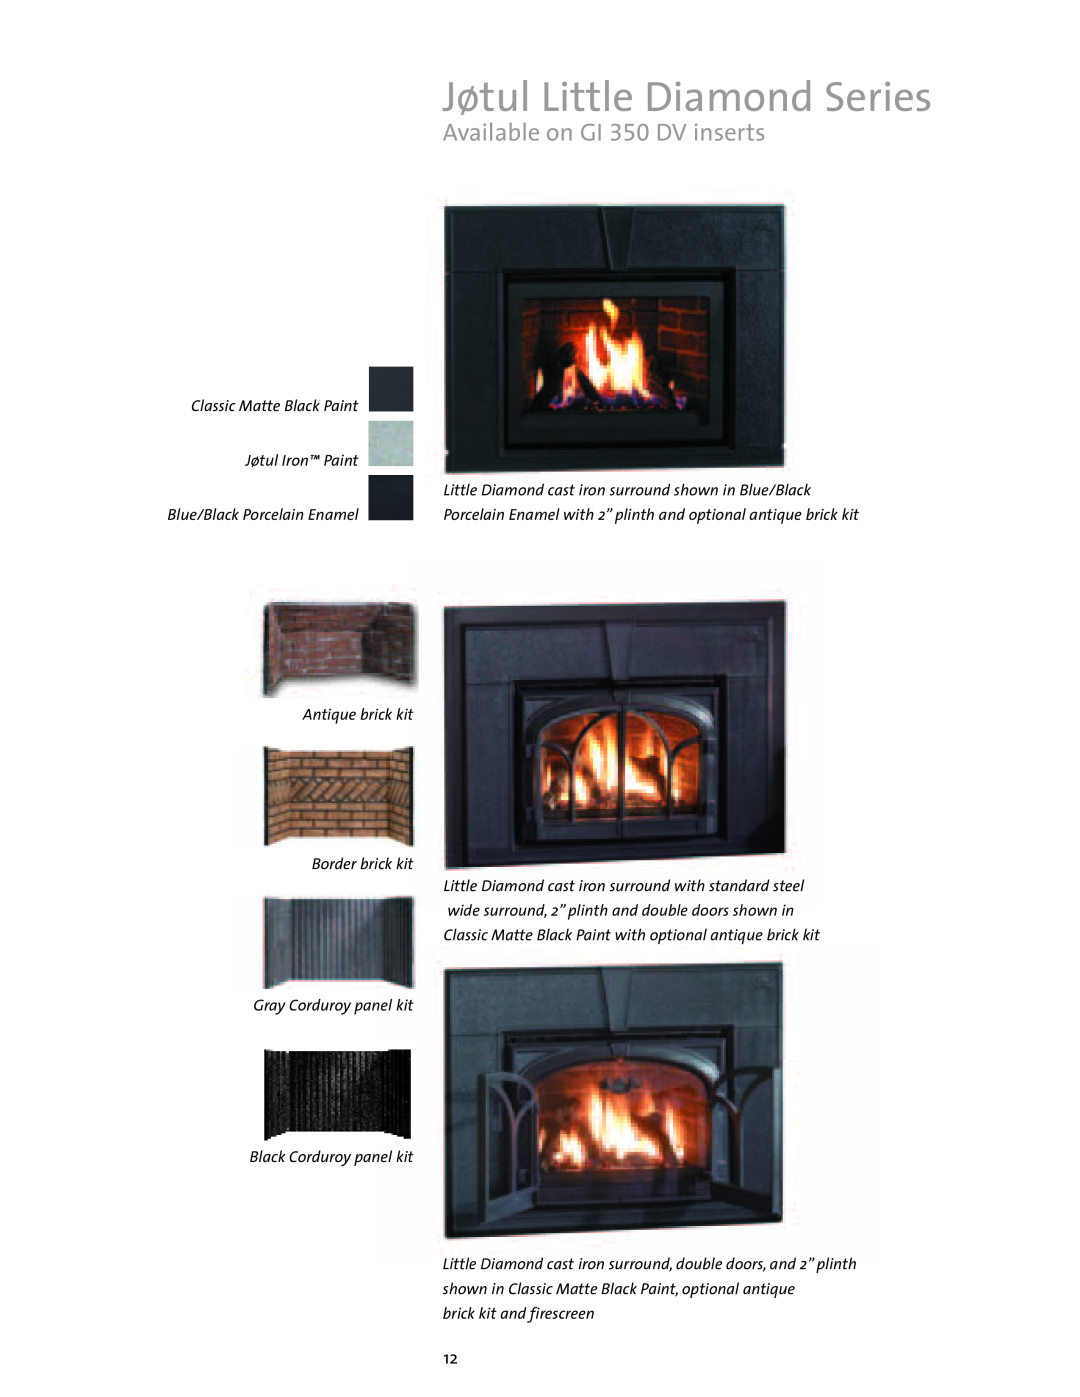 Jotul Gas Inserts and Fireplaces brochure Jøtul Little Diamond Series, Available on GI 350 DV inserts 